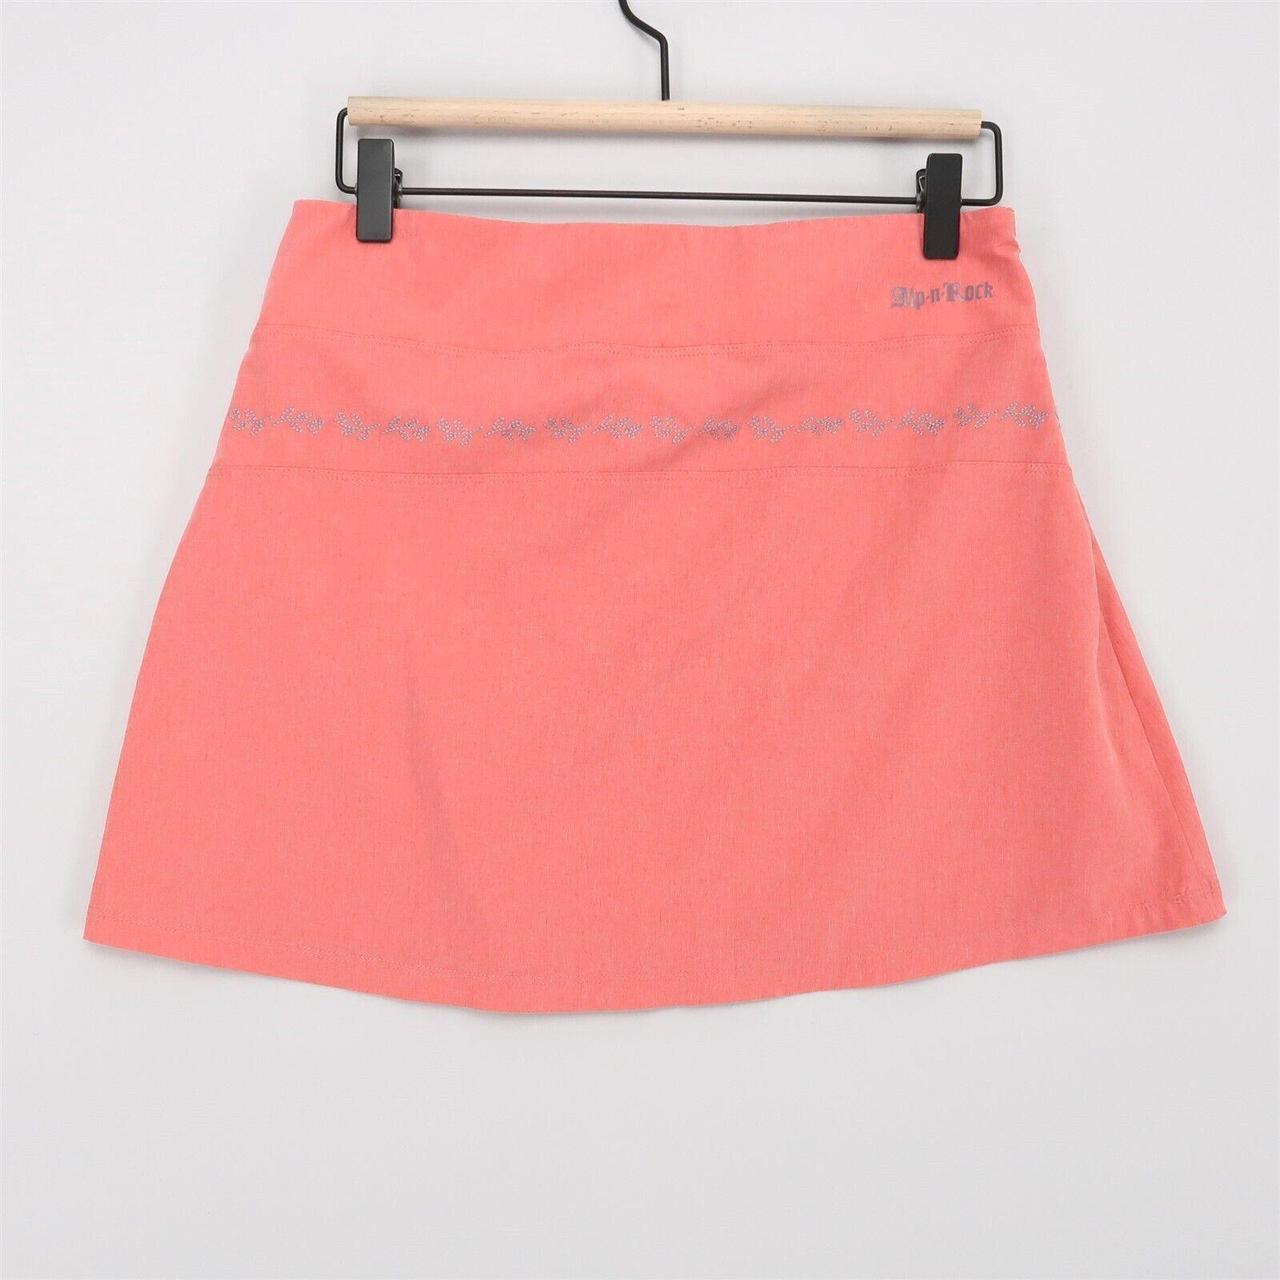 Fineside Women's Pink Skirt (2)